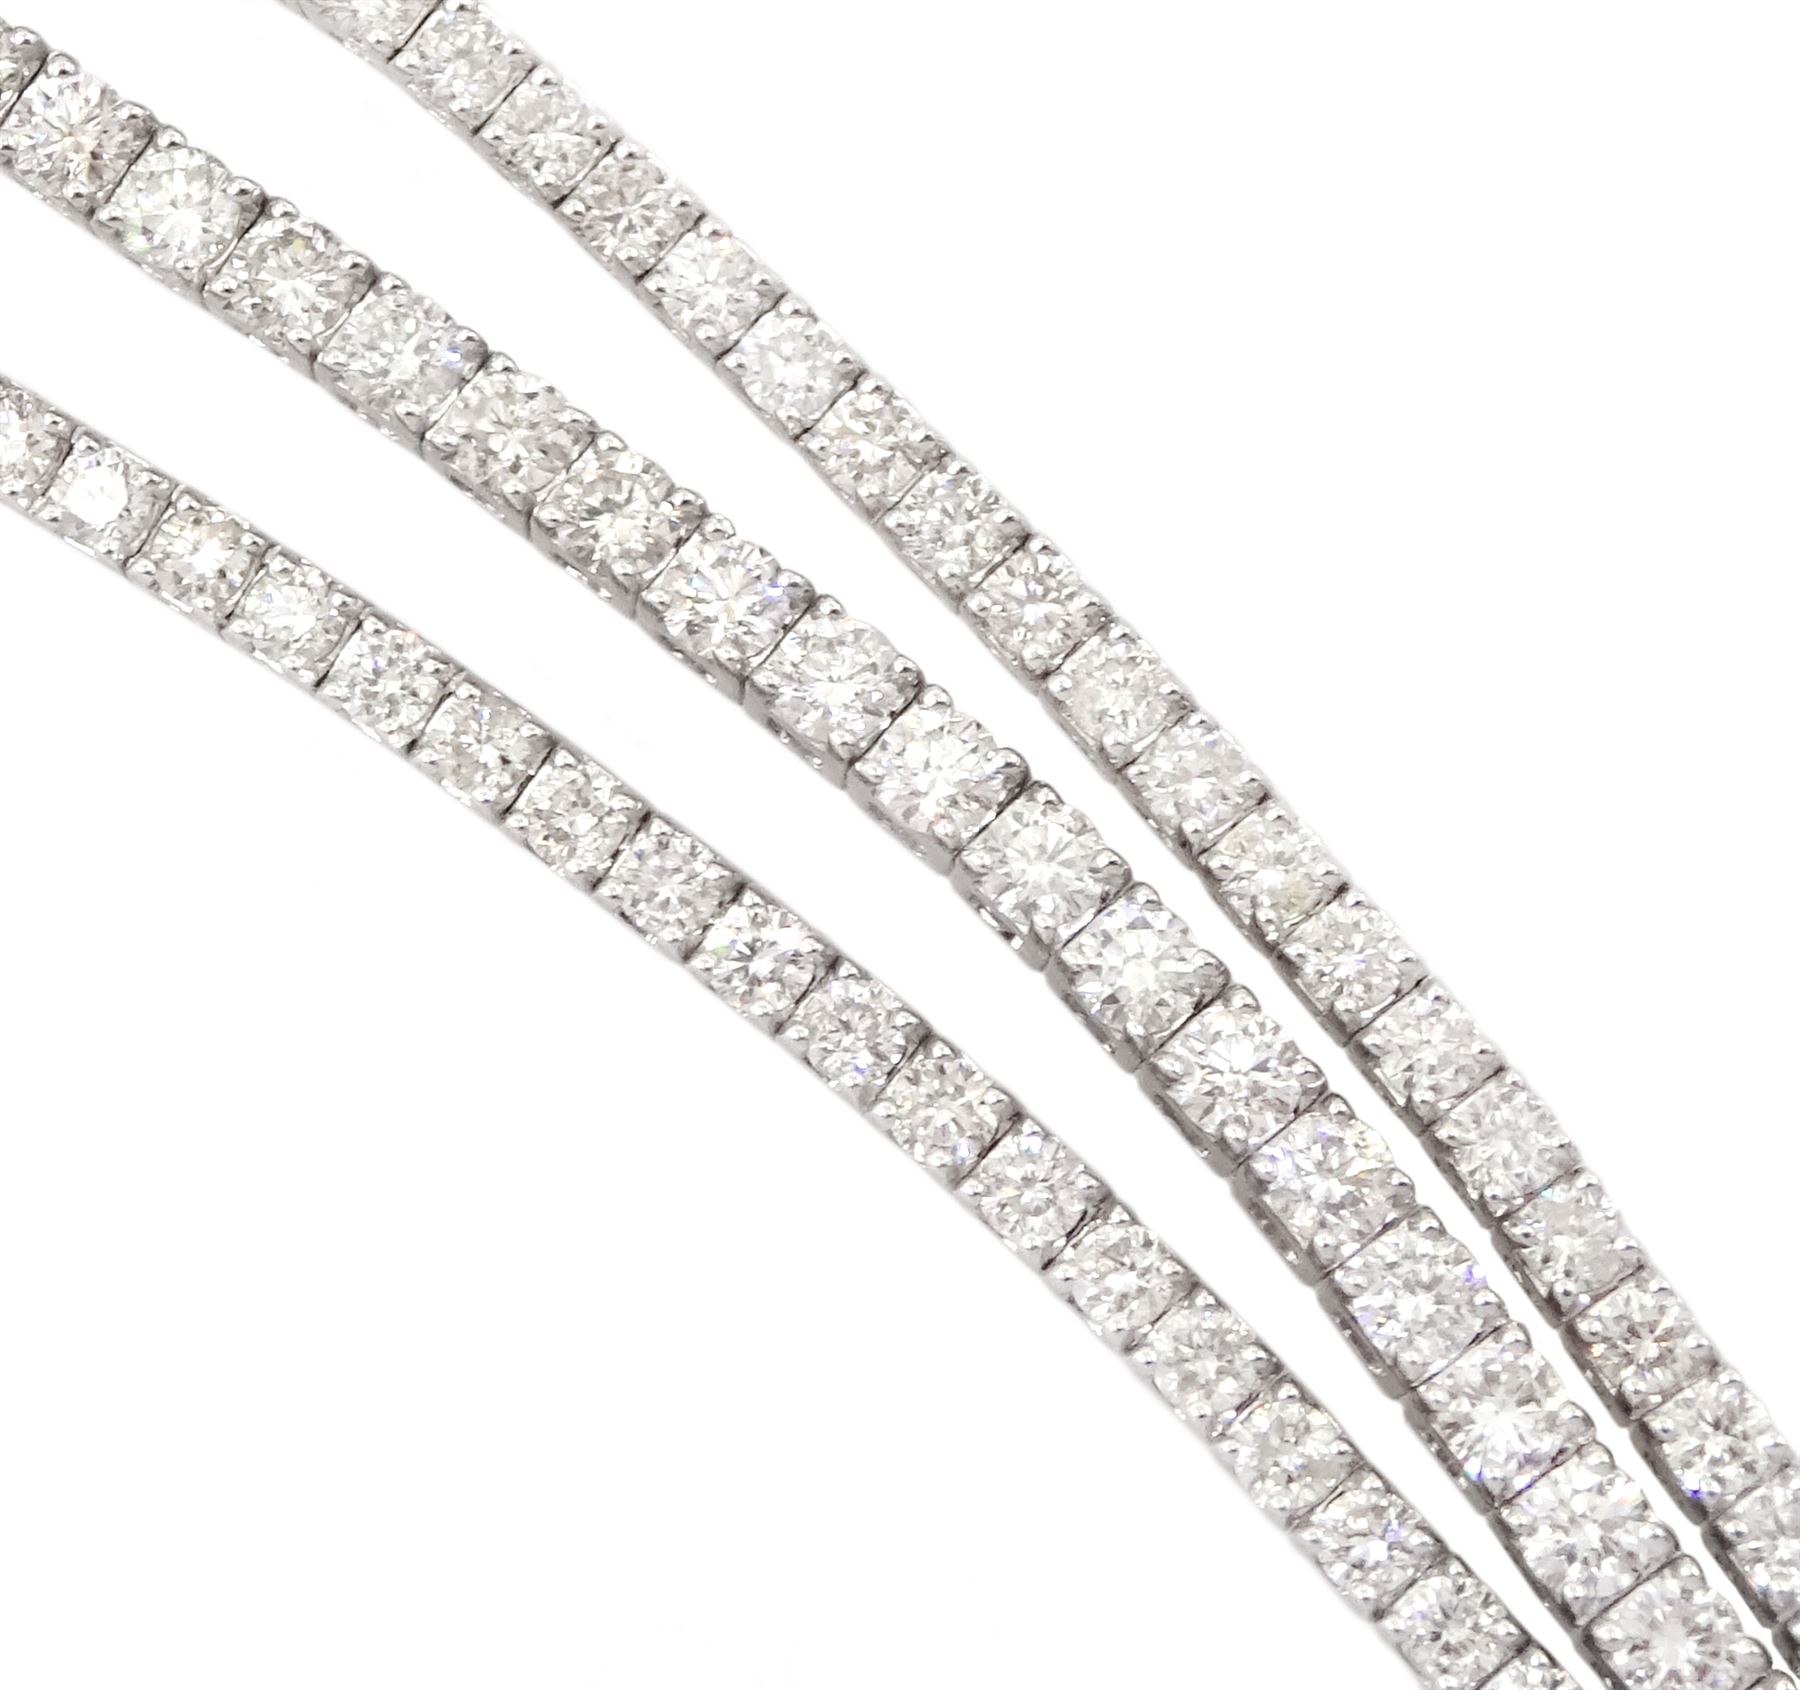 18ct white gold three row round brilliant cut diamond bracelet - Image 4 of 4